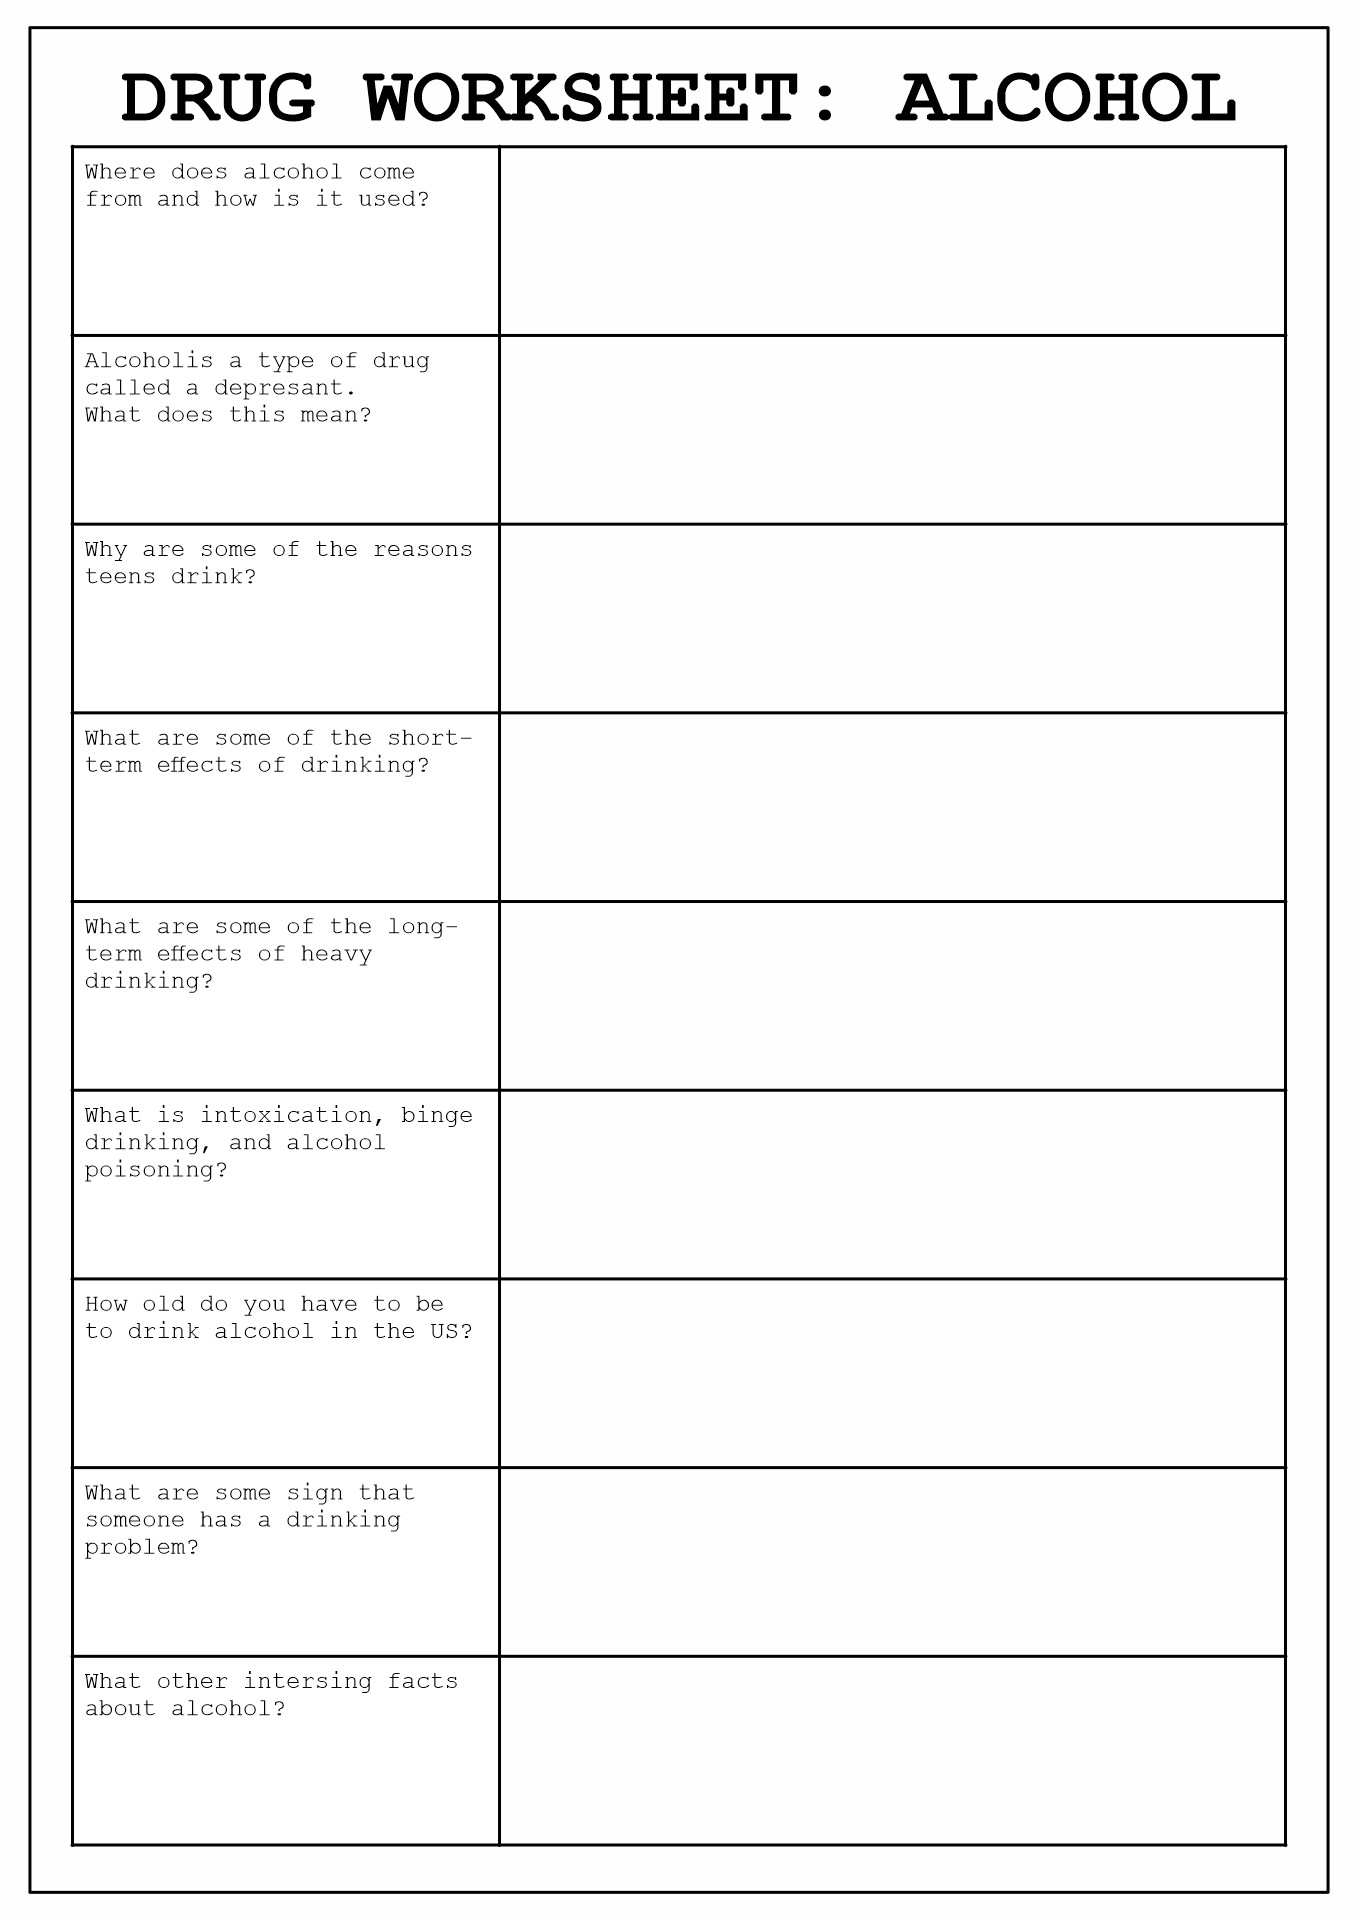 Drug and Alcohol Printable Worksheet Image